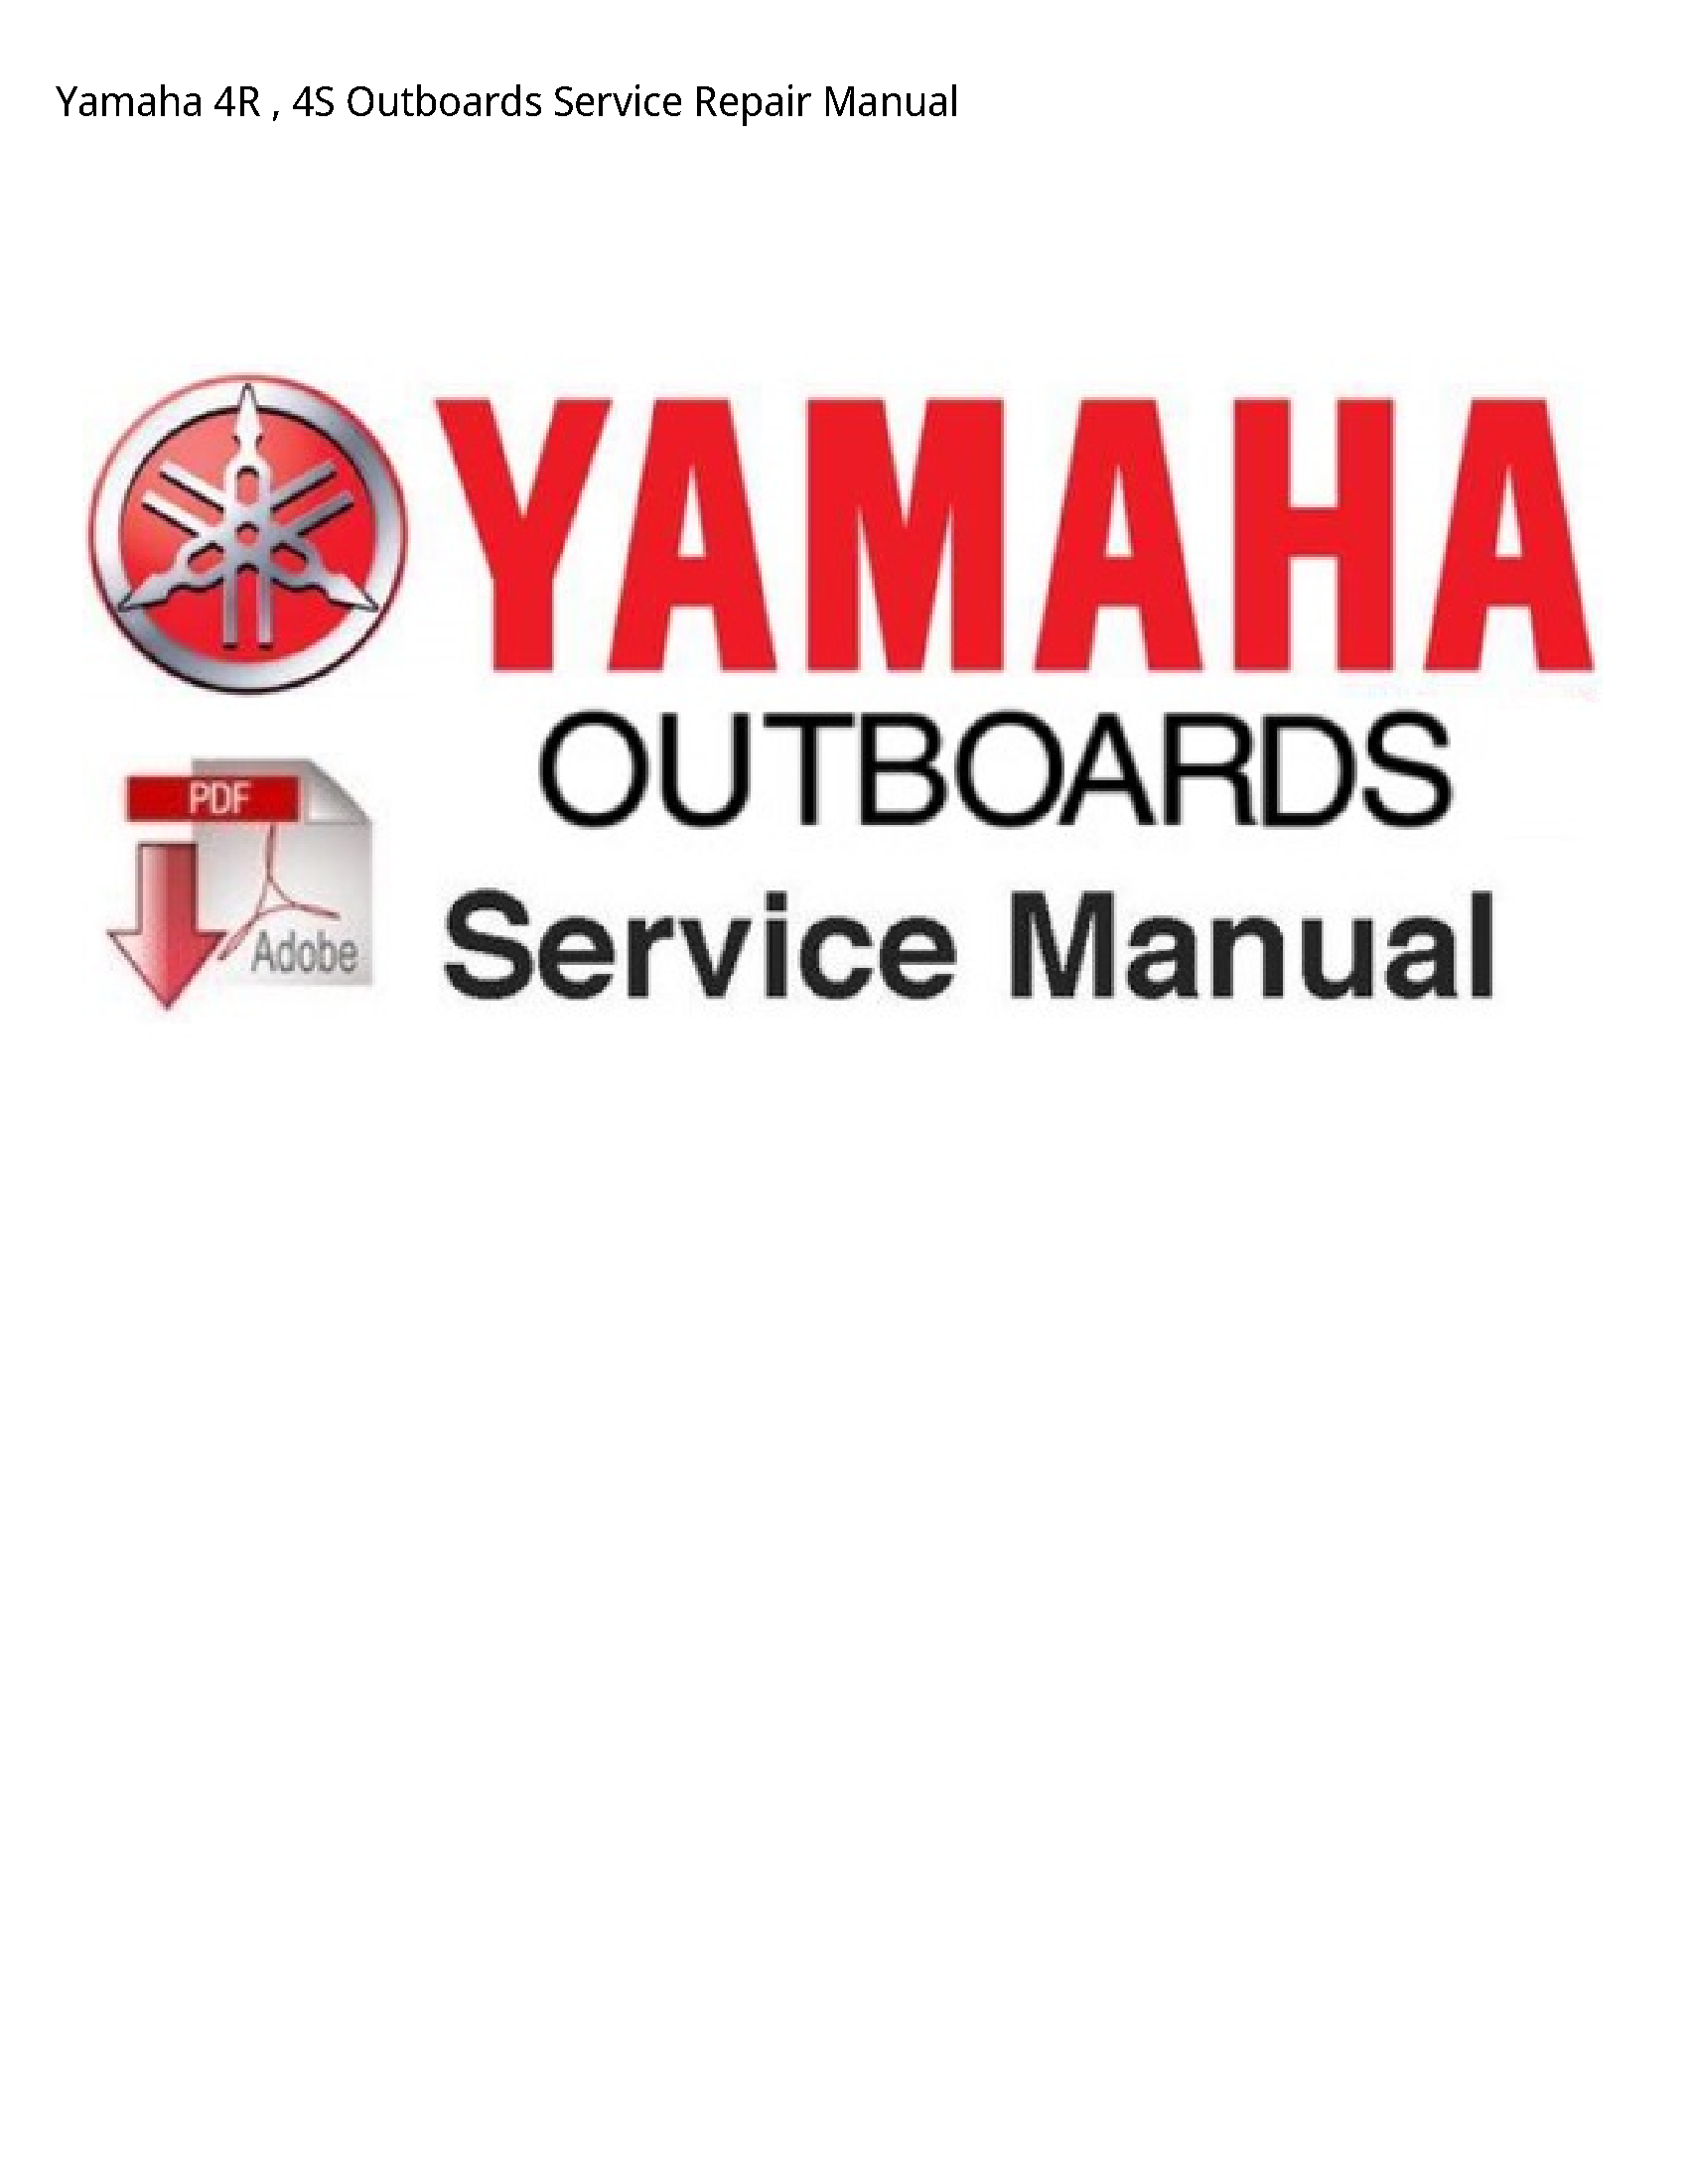 Yamaha 4R Outboards manual